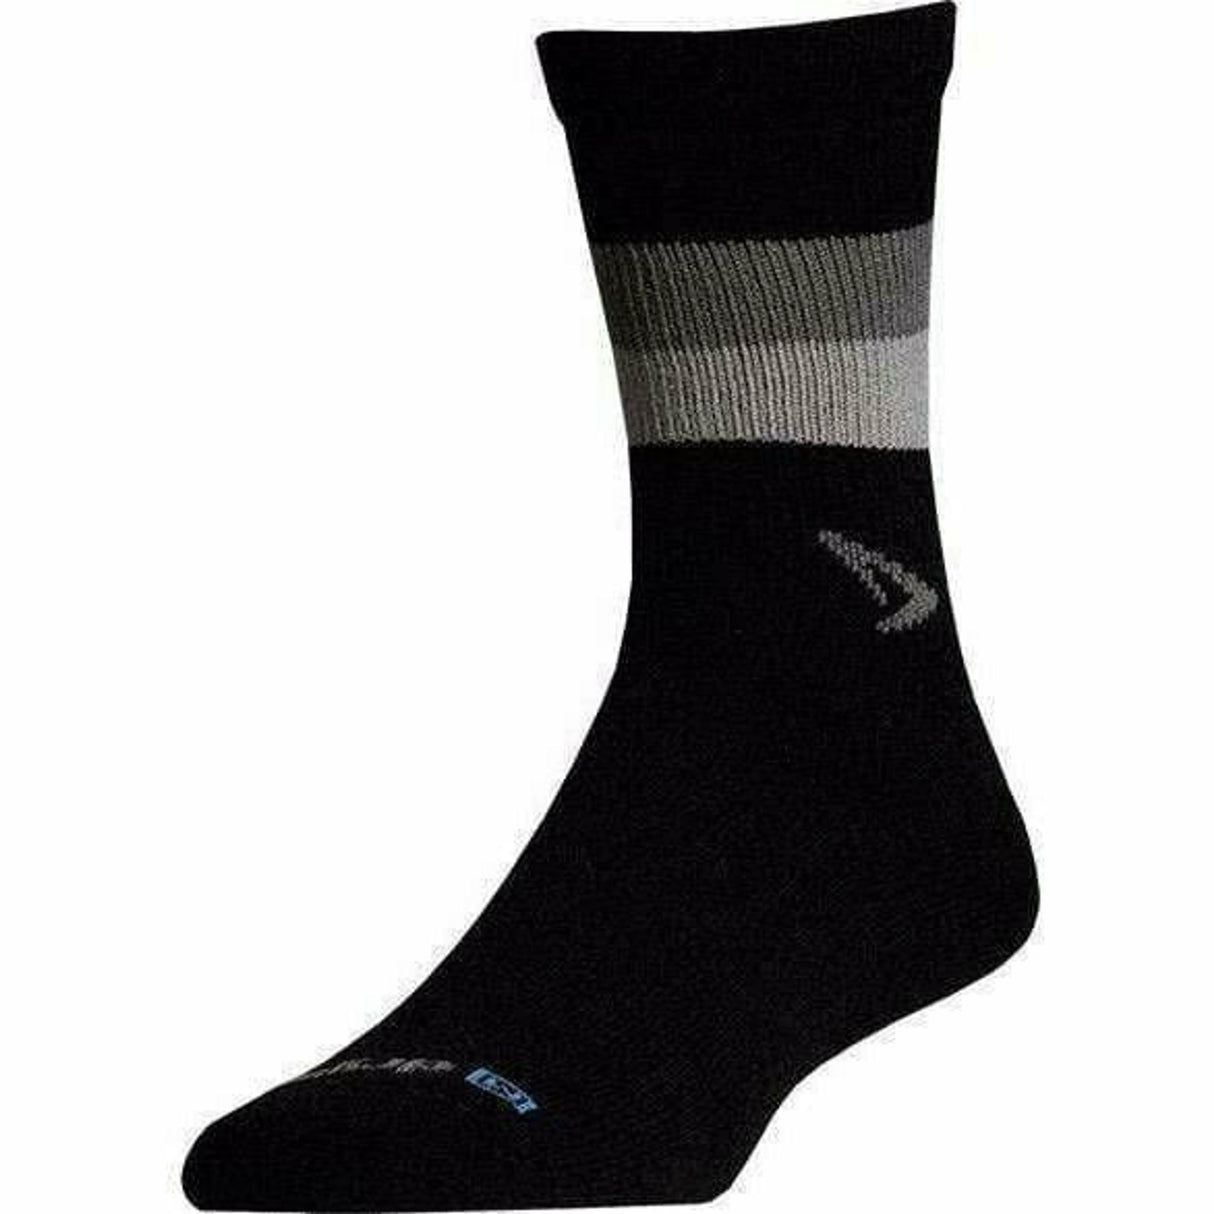 Drymax Running Lite-Mesh Crew Socks  -  Small / Black with Anthracite/Gray